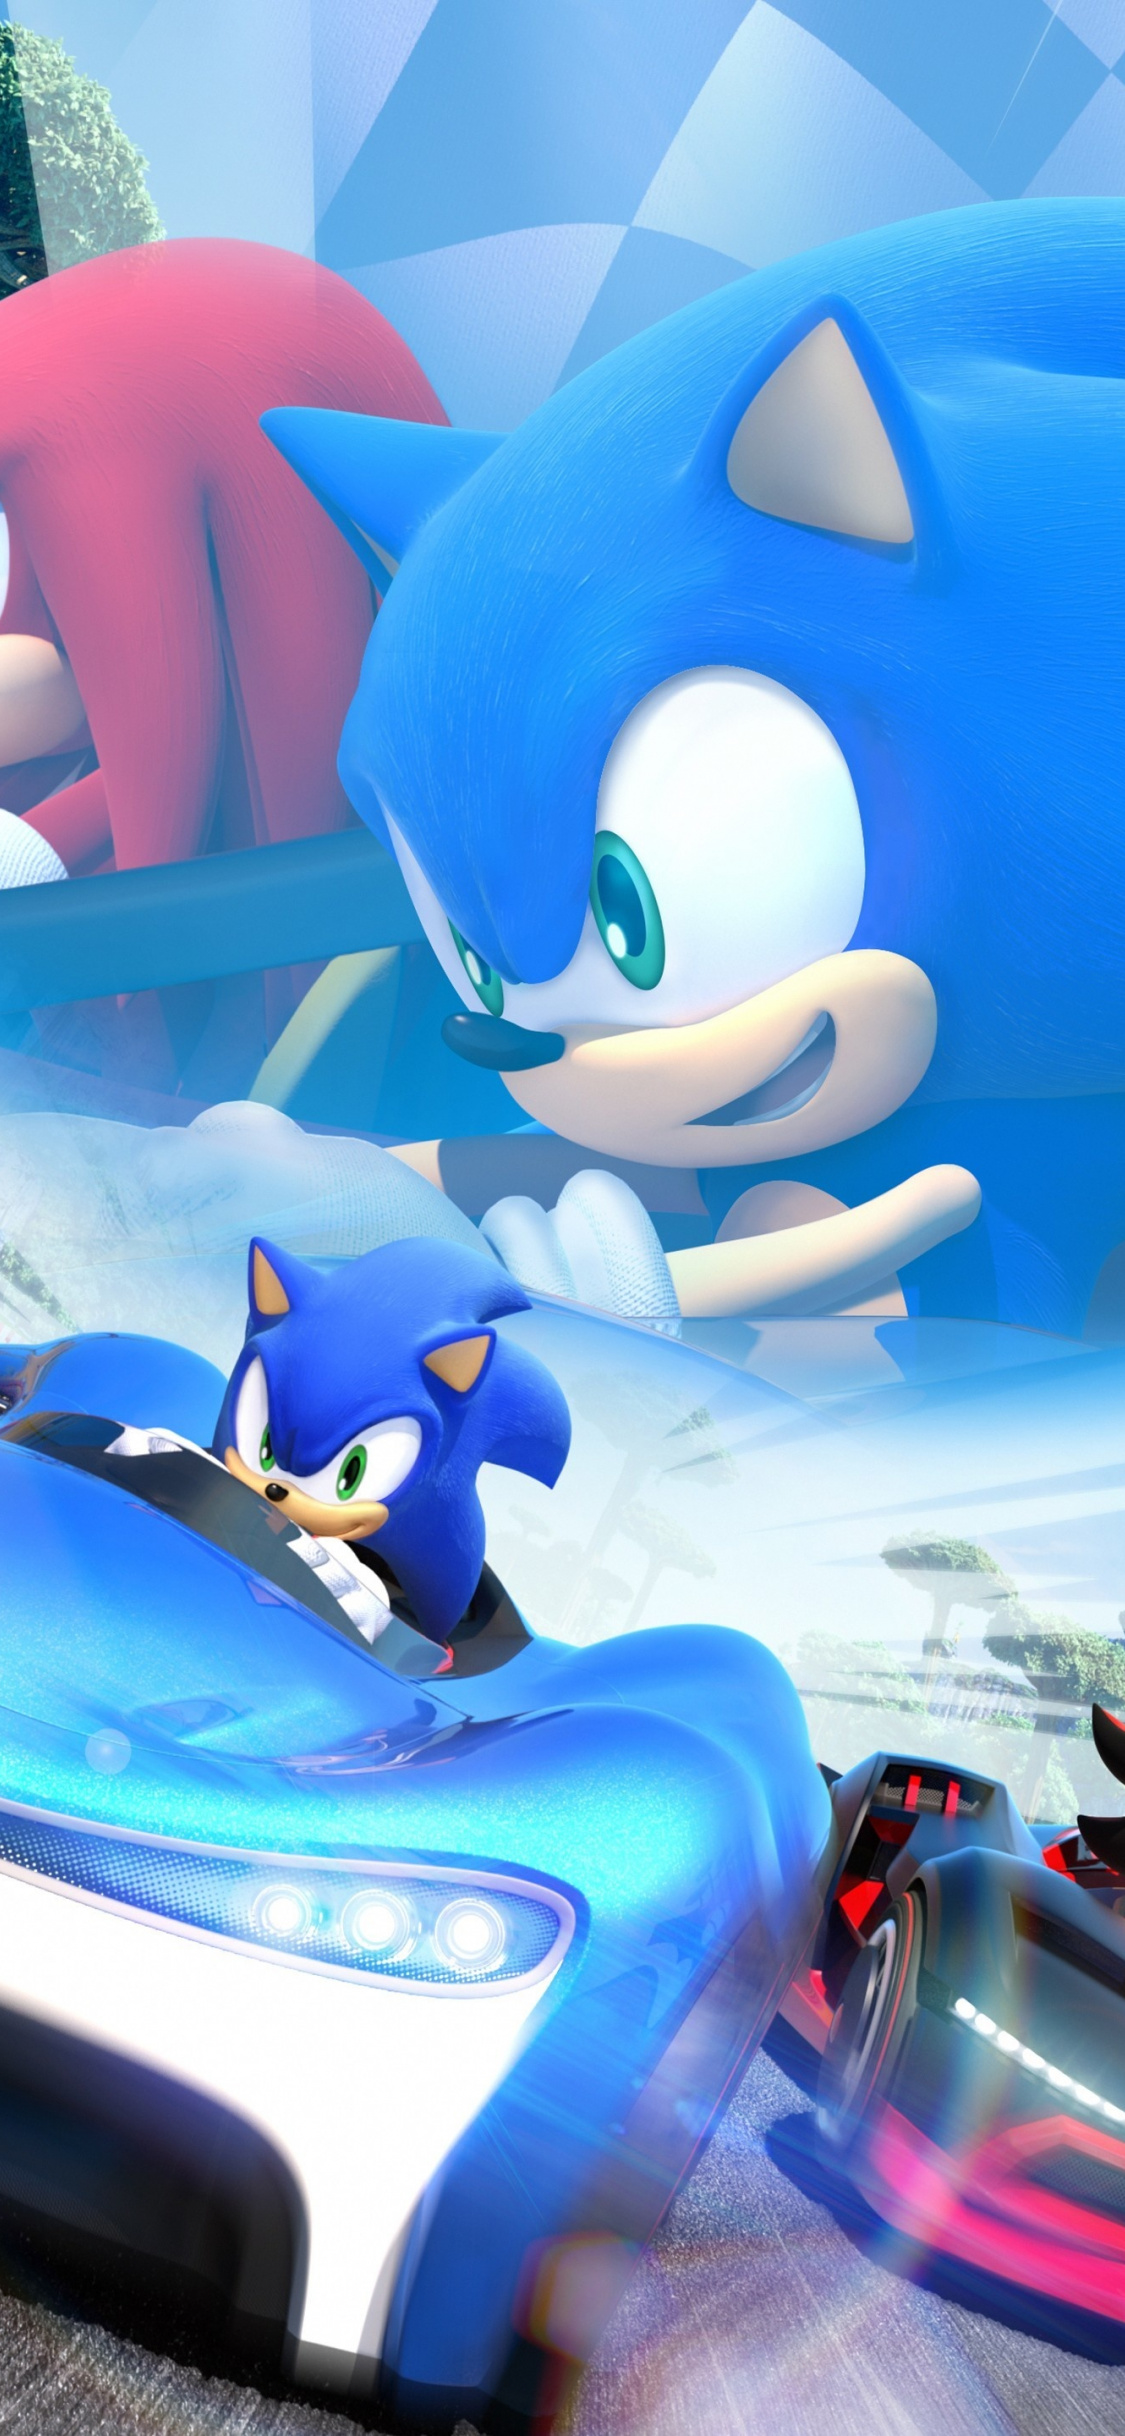 Sonic The Hedgehog, Video Game, Kart Racing Game, Nintendo, - Team Sonic Racing - HD Wallpaper 